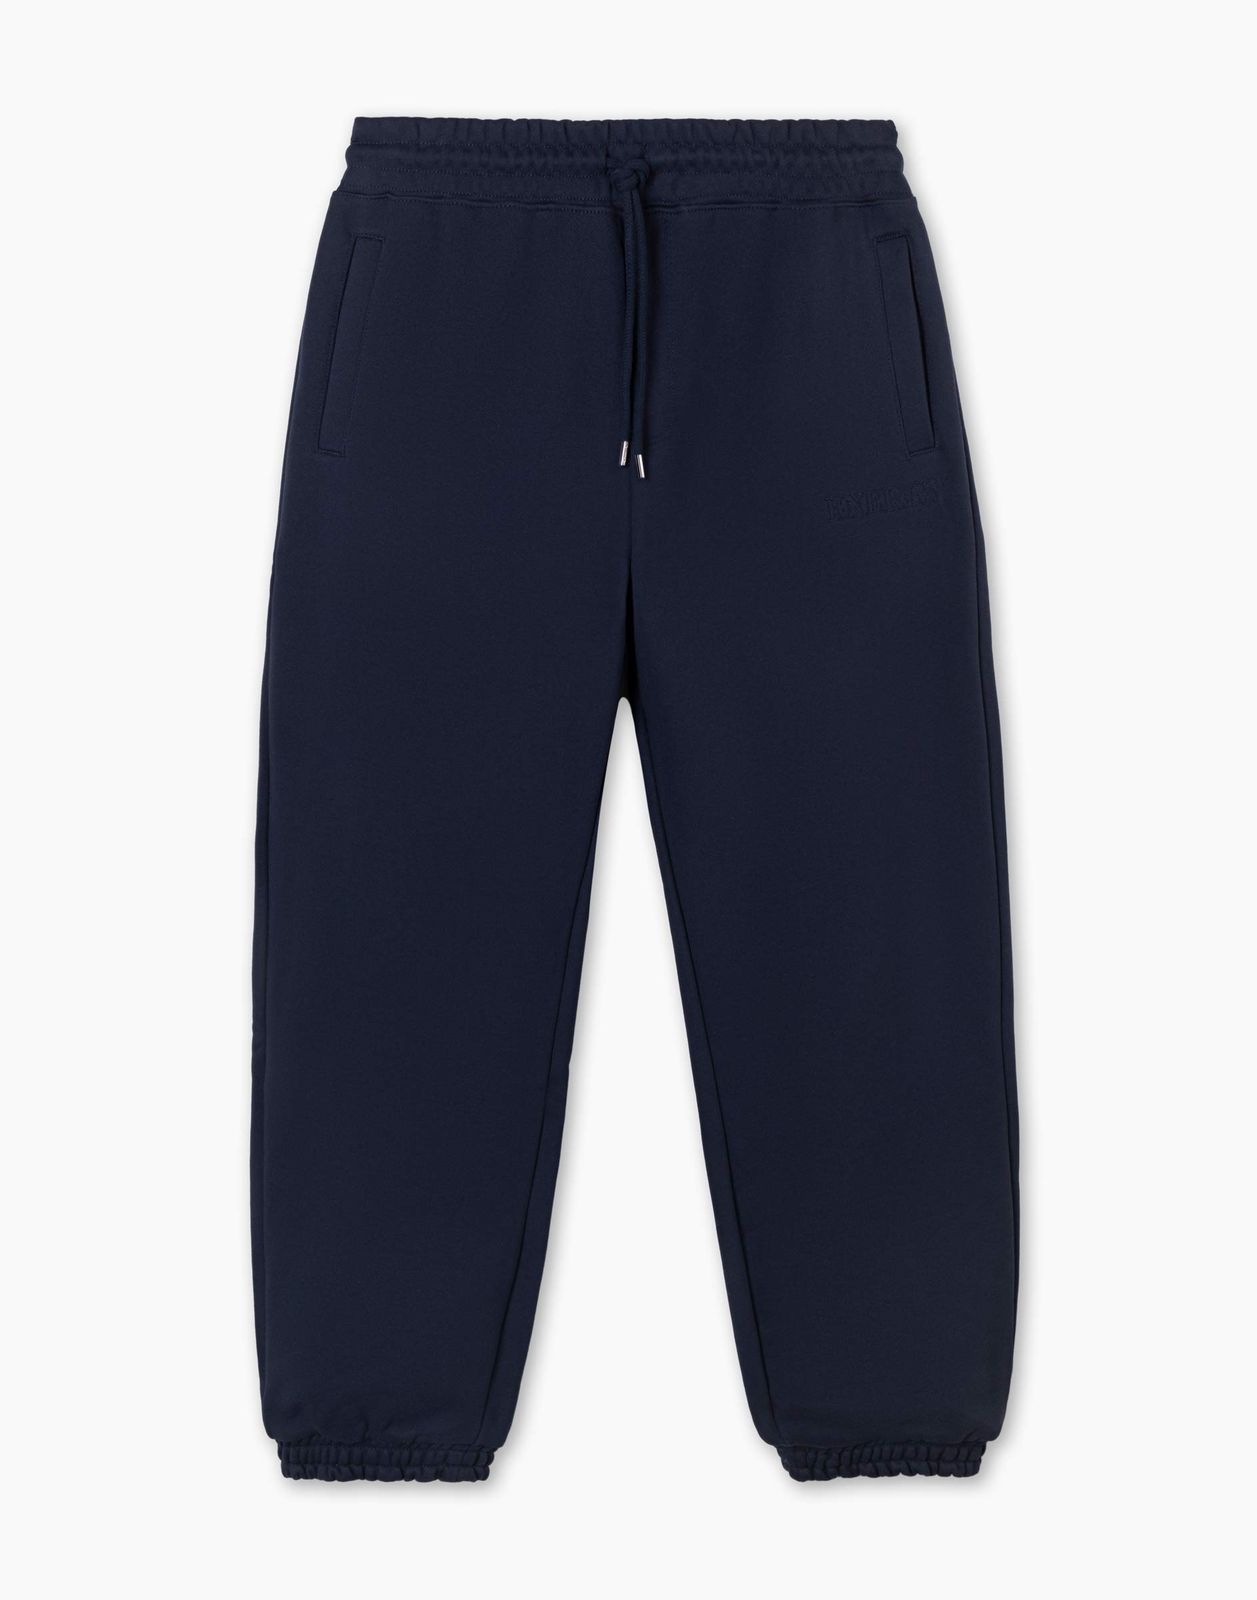 Спортивные брюки мужские Gloria Jeans BAC013278 синие XL/182 (52-54)